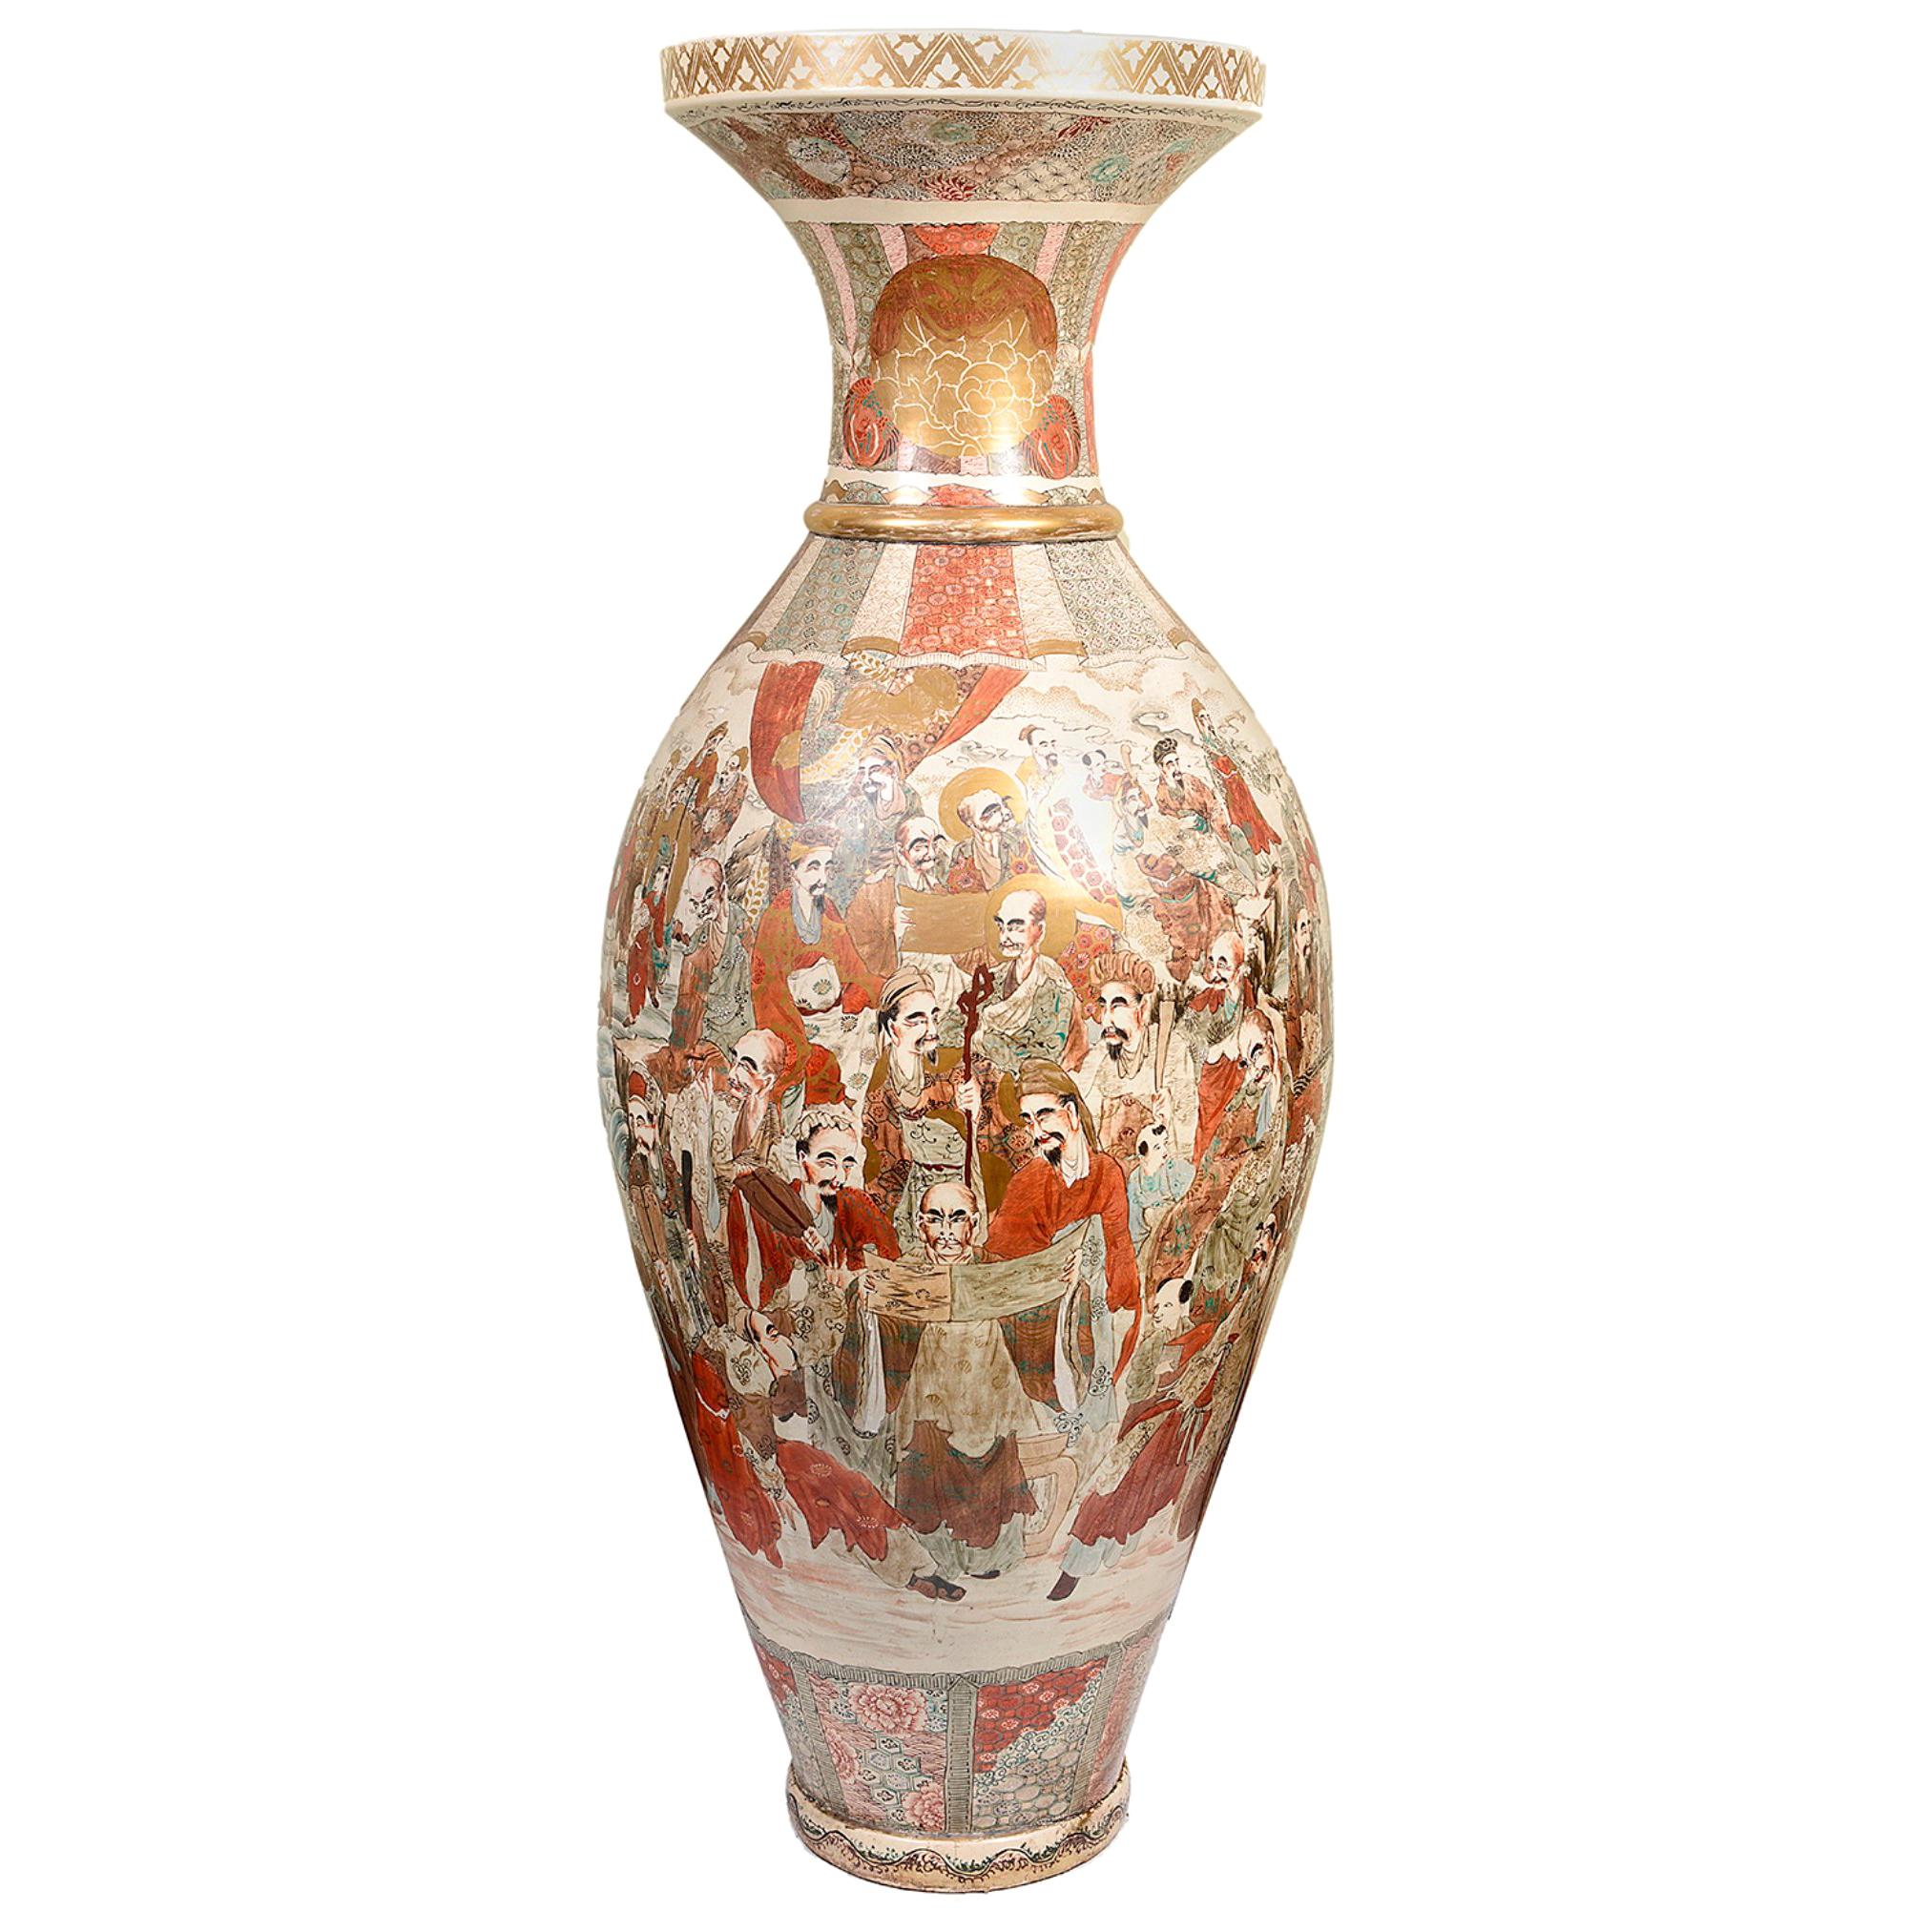 Monumental 19th Century Satsuma Vase 56"(143cm)